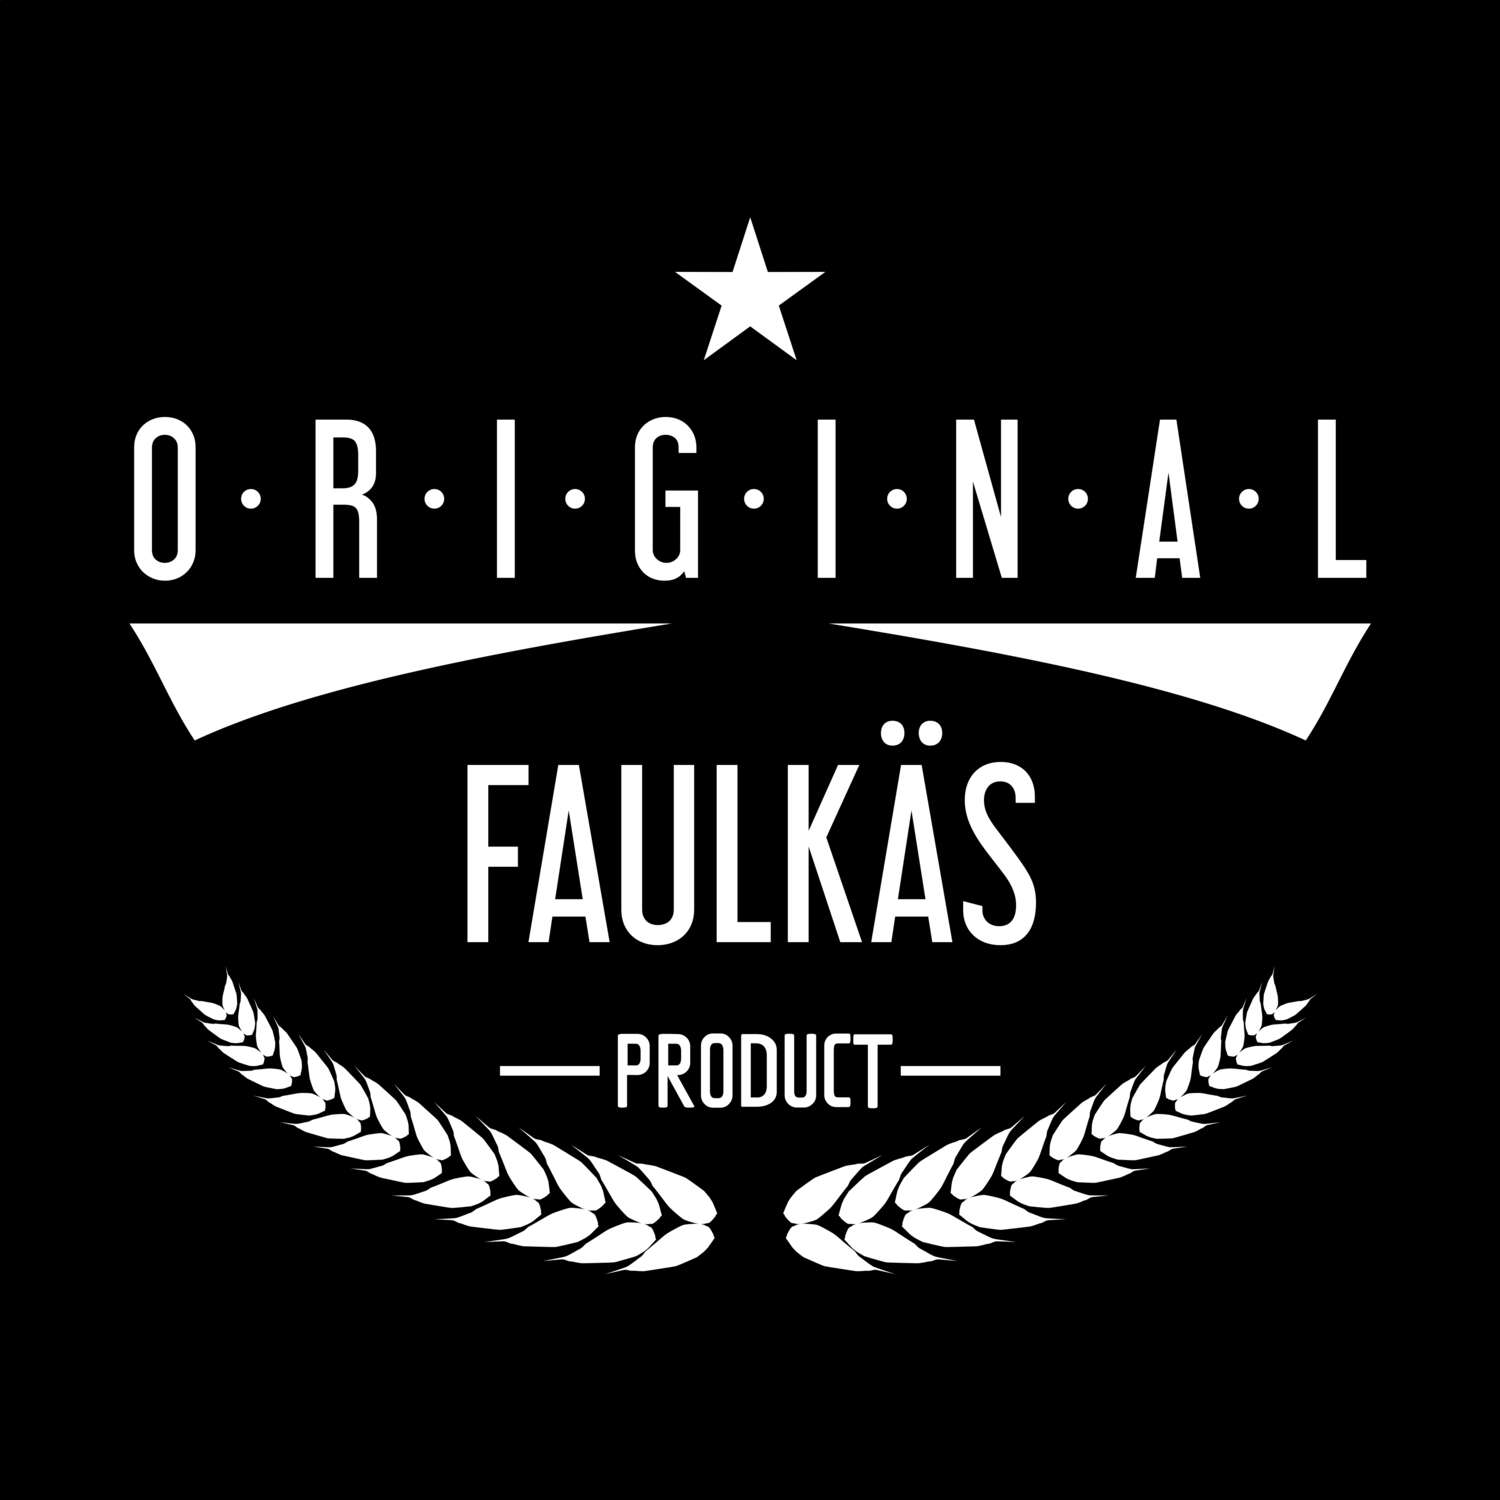 Faulkäs T-Shirt »Original Product«